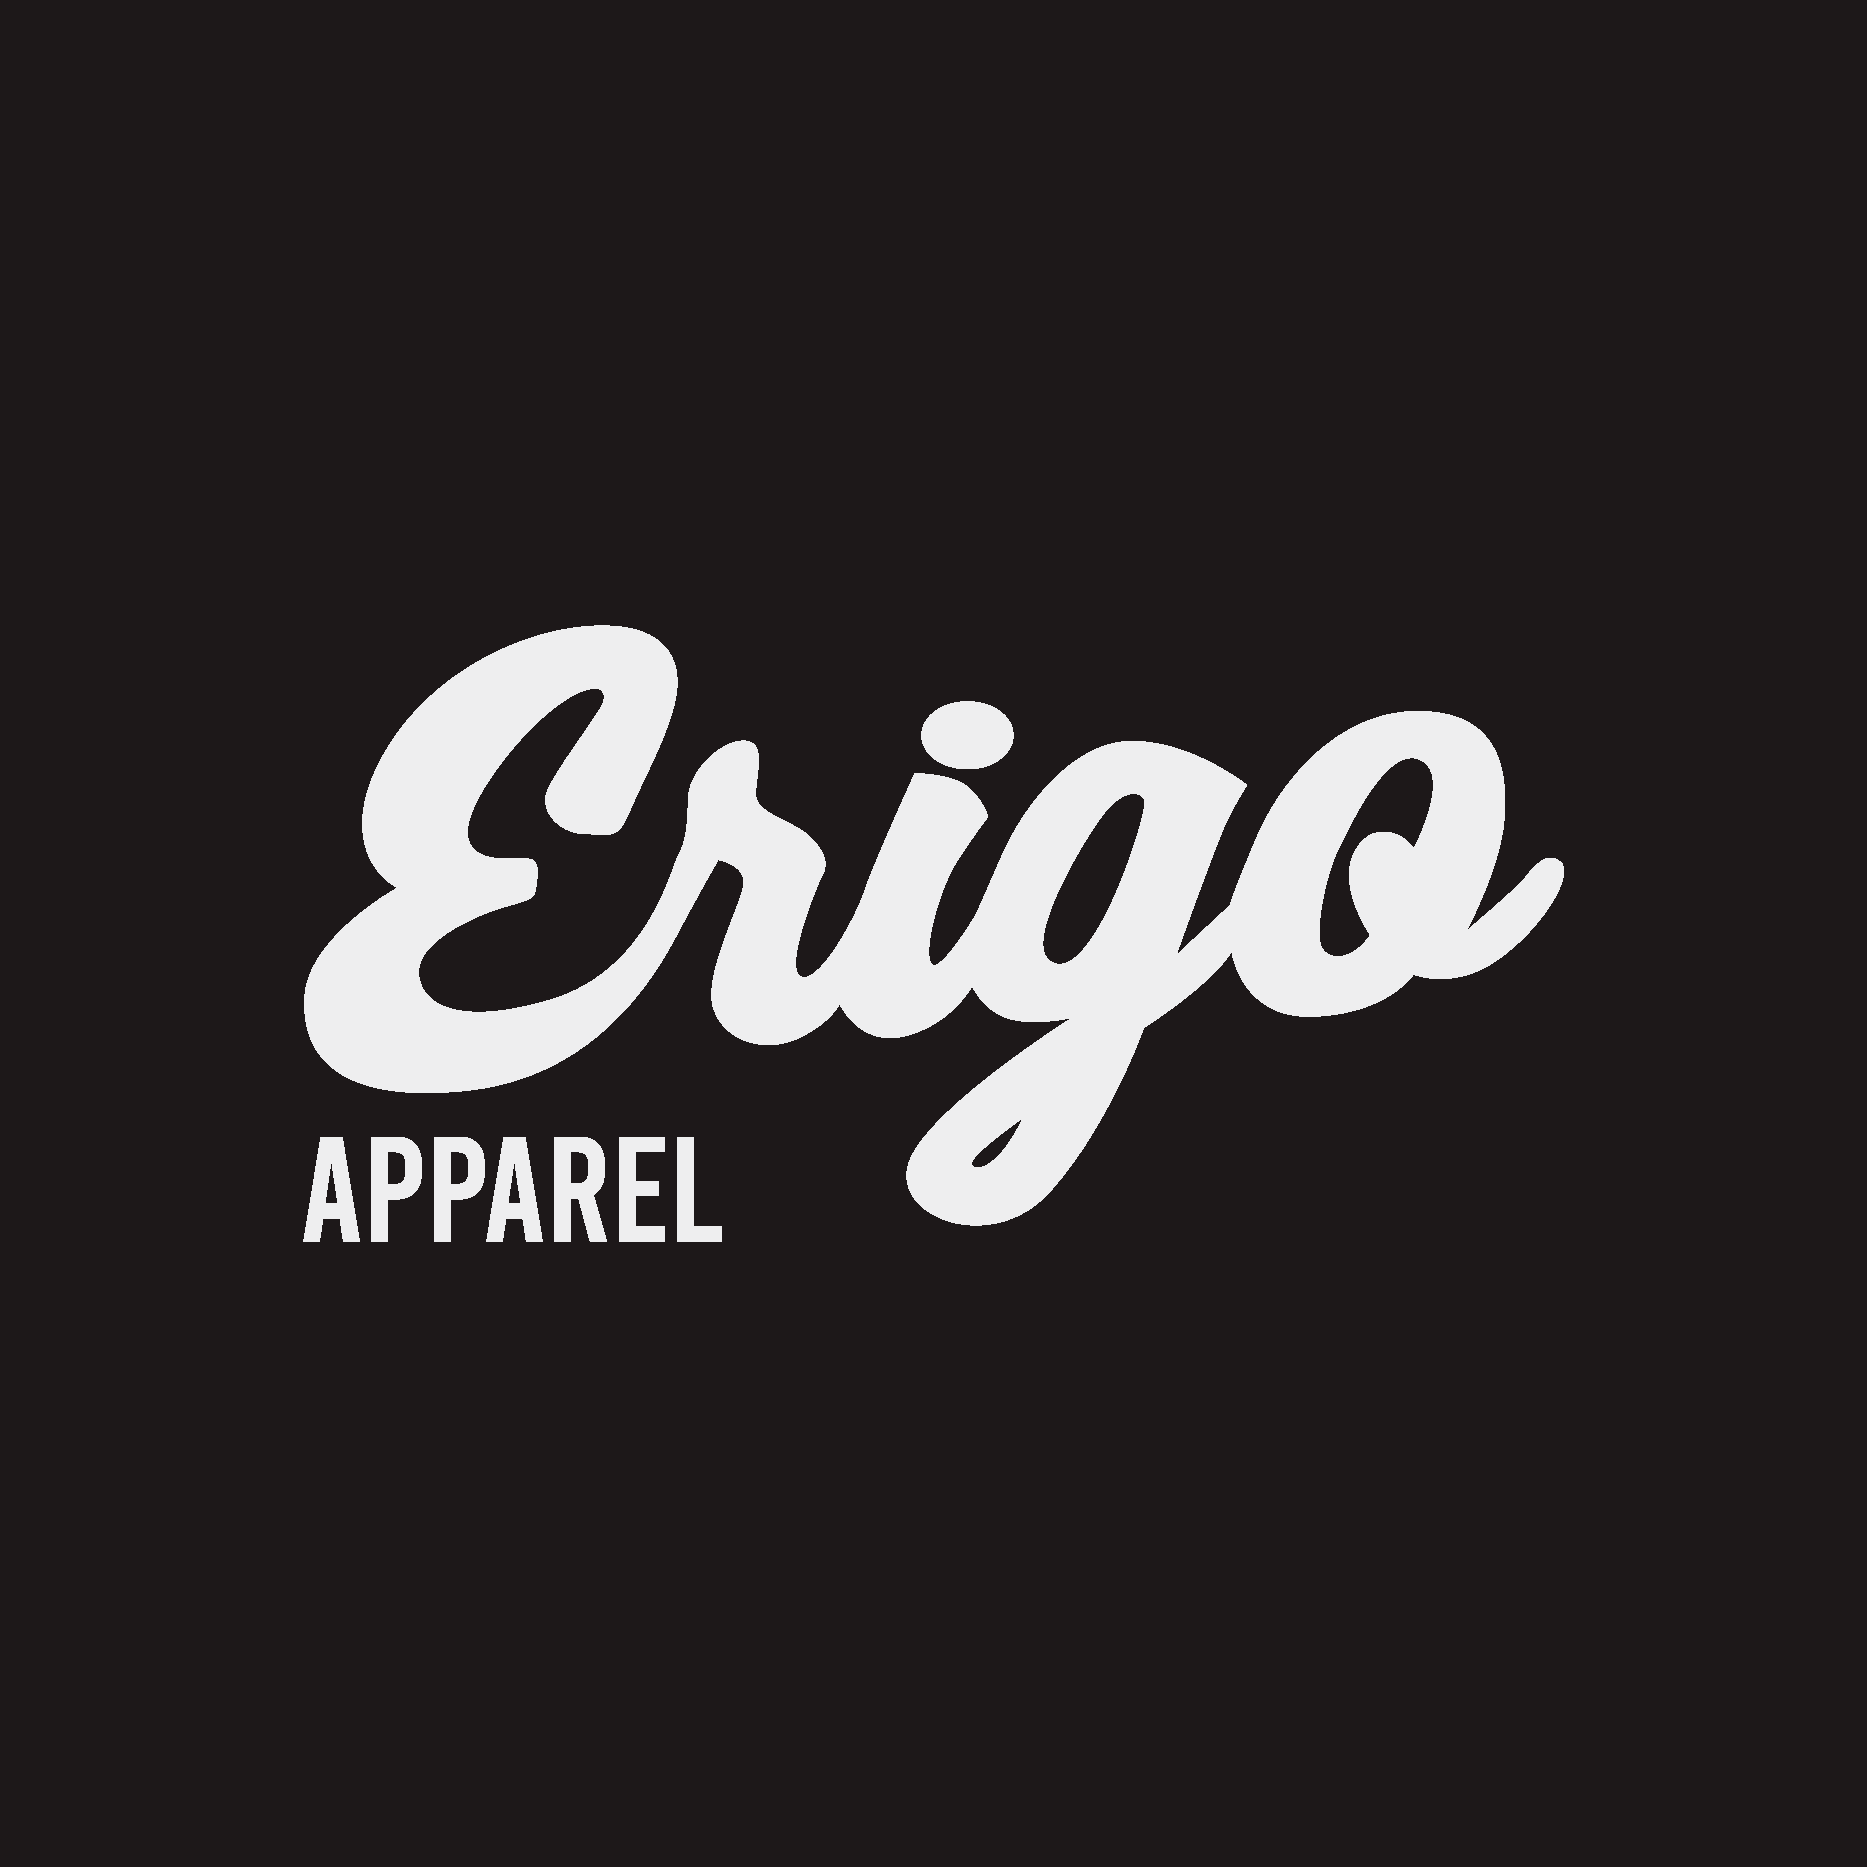 Erigo Logo Vector - (.Ai .PNG .SVG .EPS Free Download)